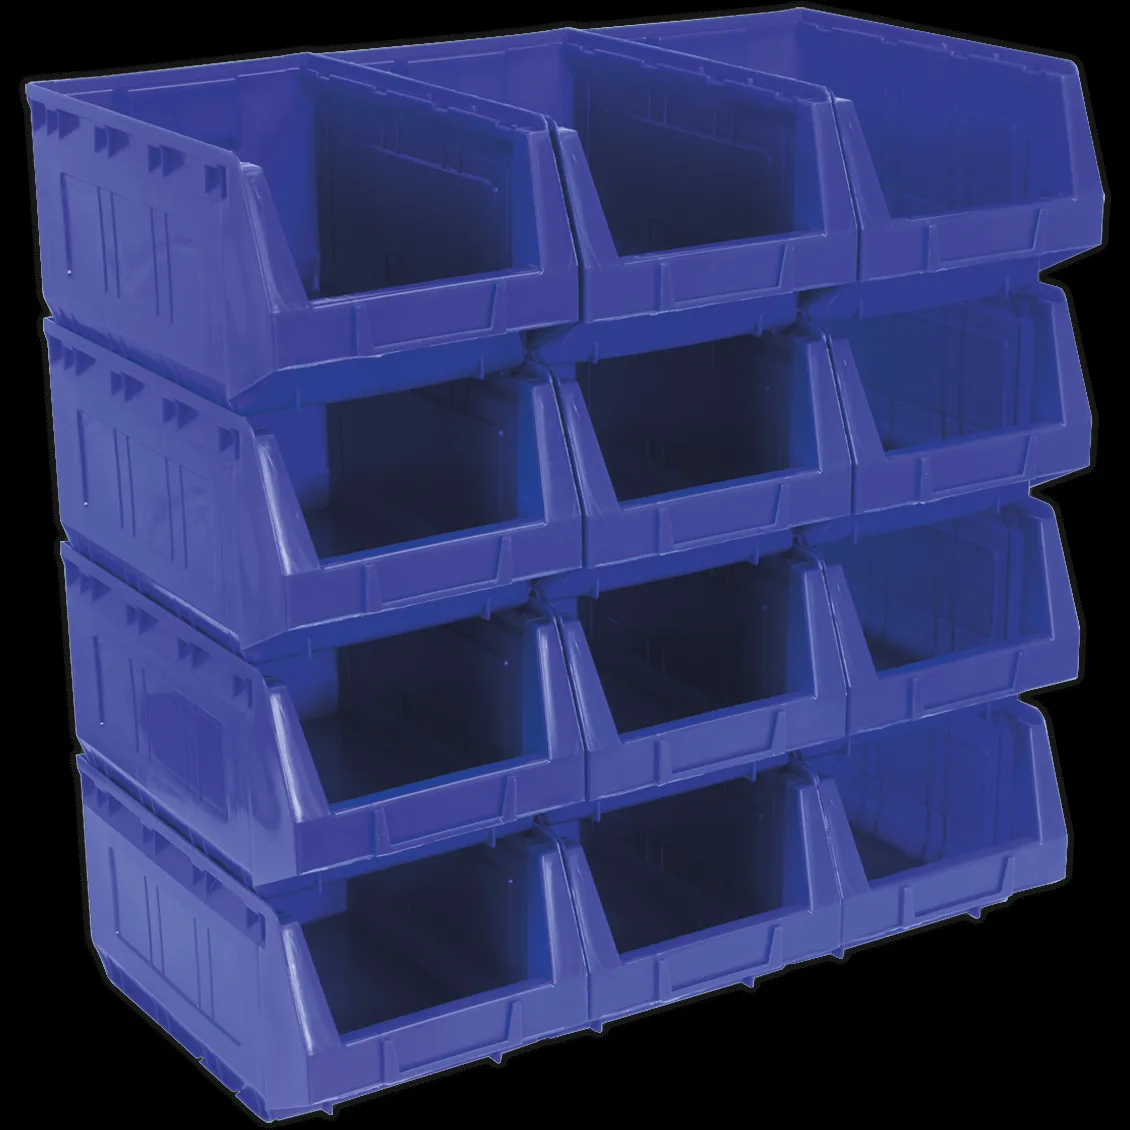 Sealey Plastic Storage Bin 209 x 356 x 164mm - Blue, Pack of 12